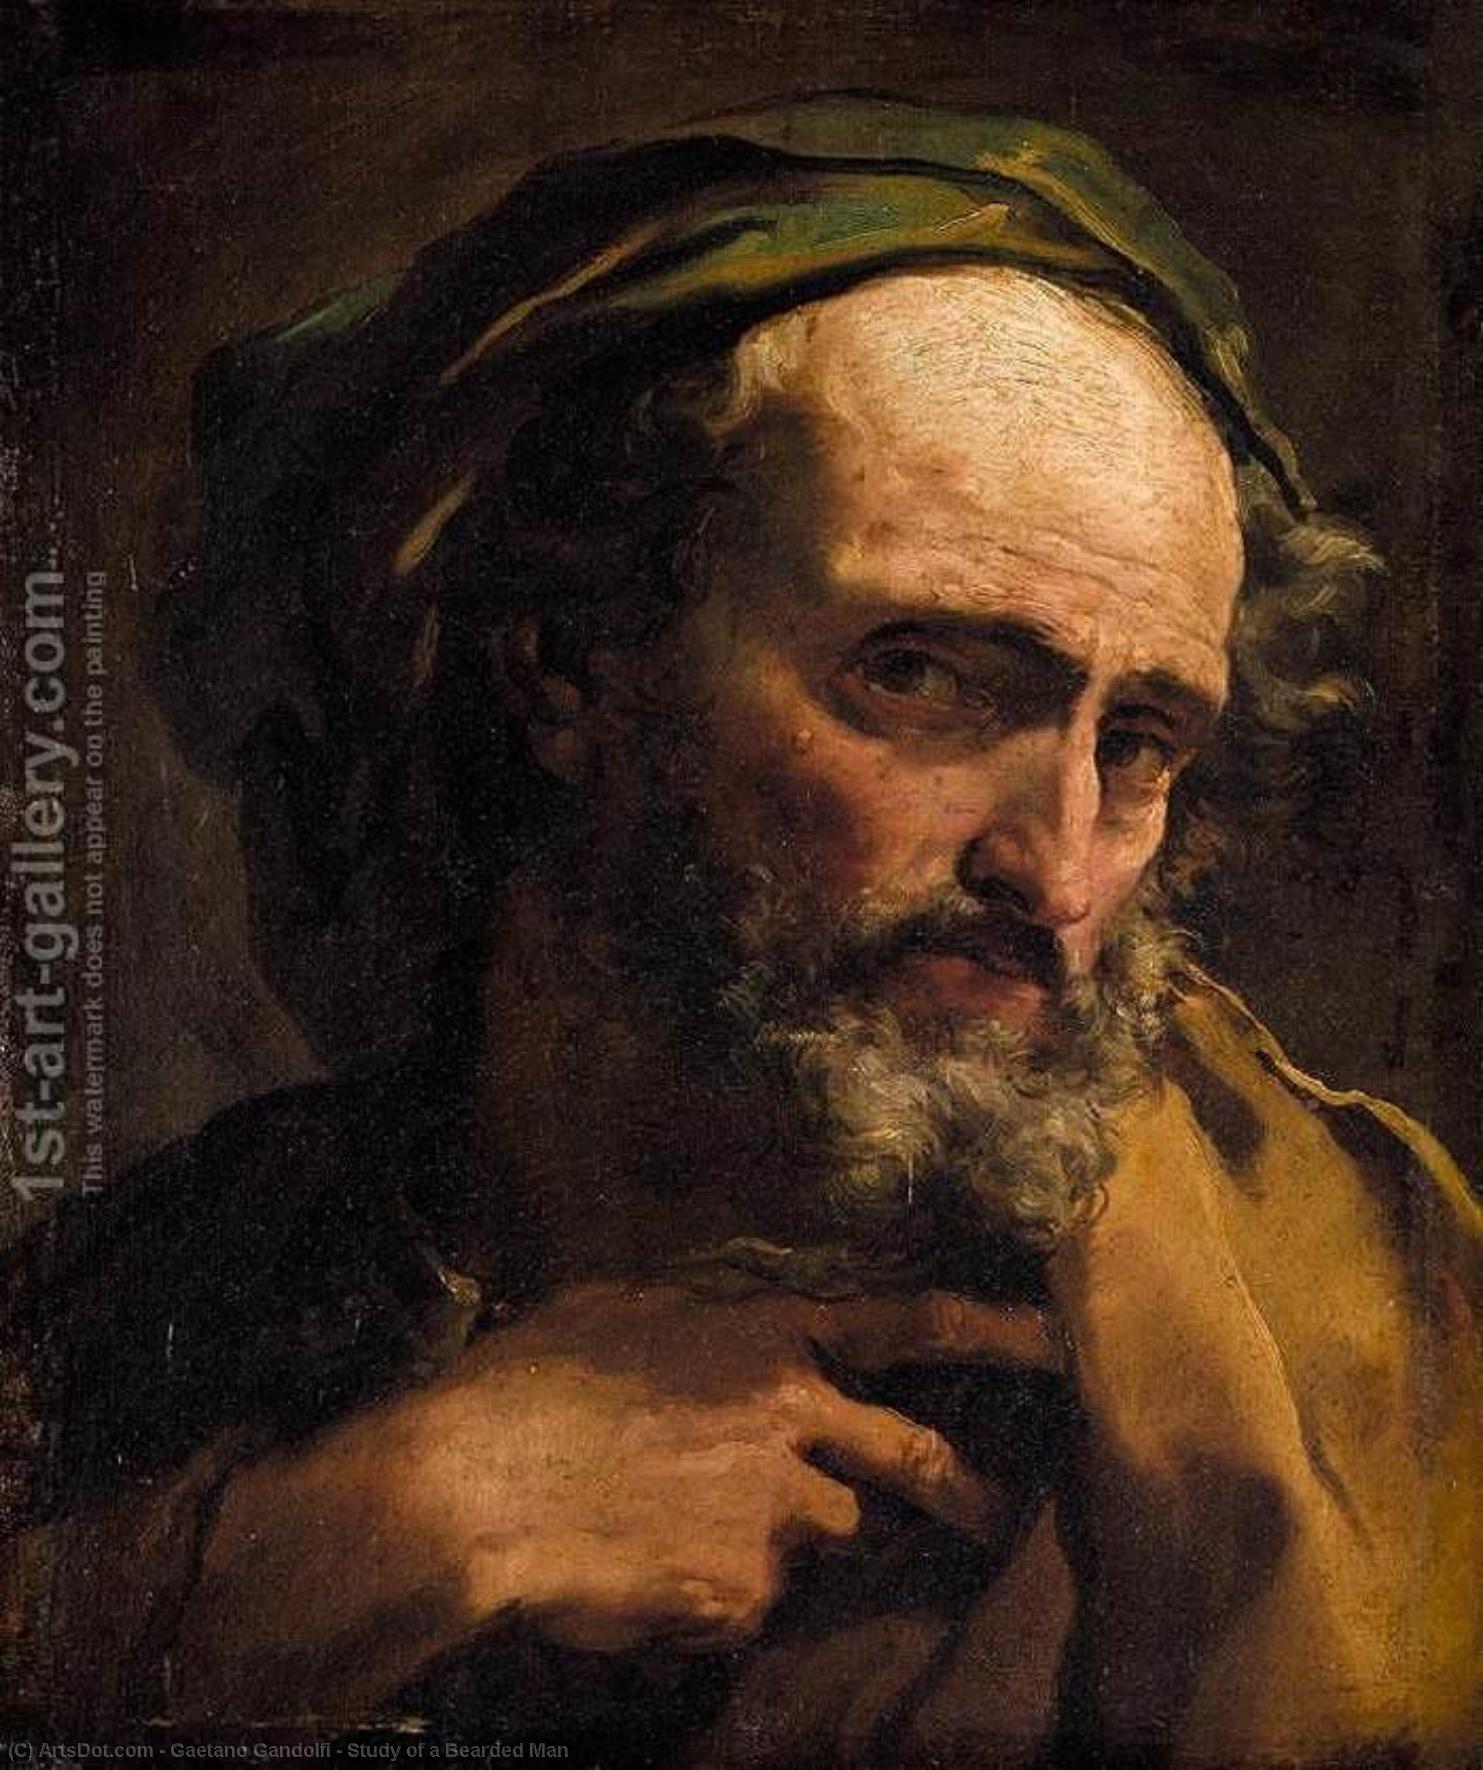 WikiOO.org - Güzel Sanatlar Ansiklopedisi - Resim, Resimler Gaetano Gandolfi - Study of a Bearded Man